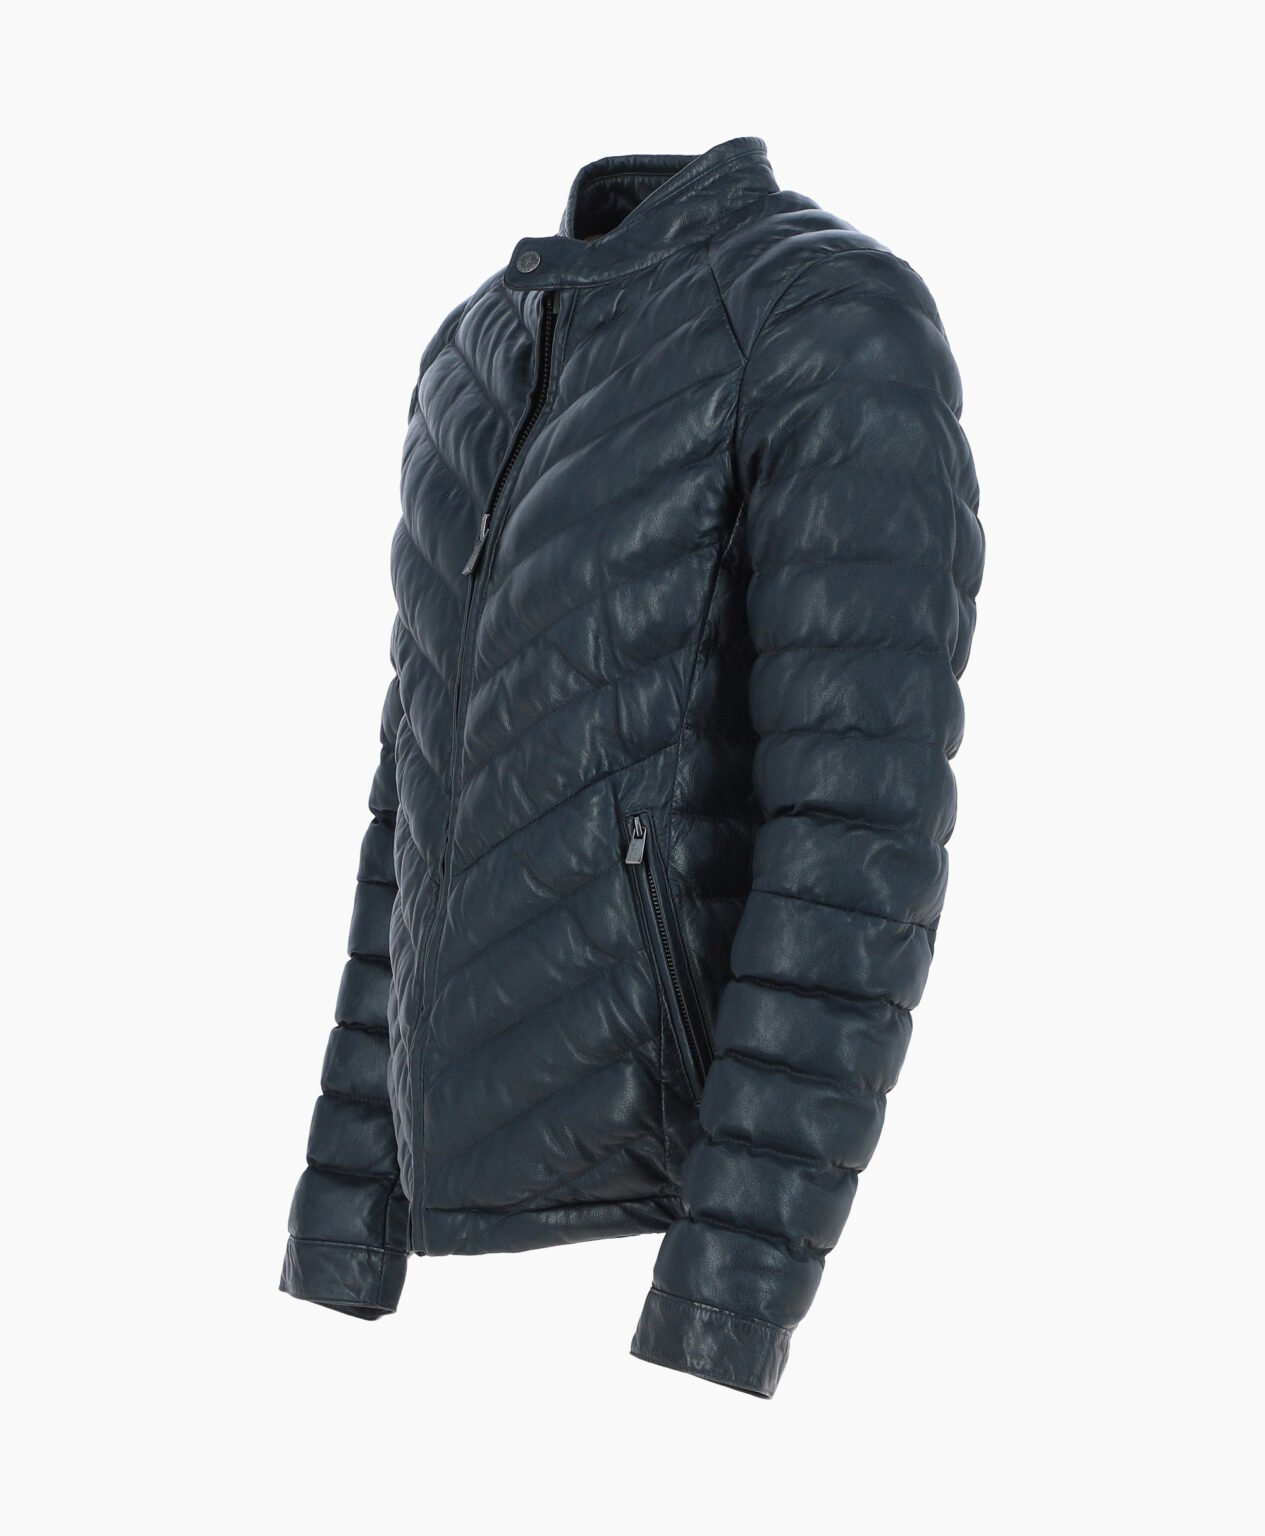 vogue-jacket-leather-puffer-jacket-navy-prescott-image201